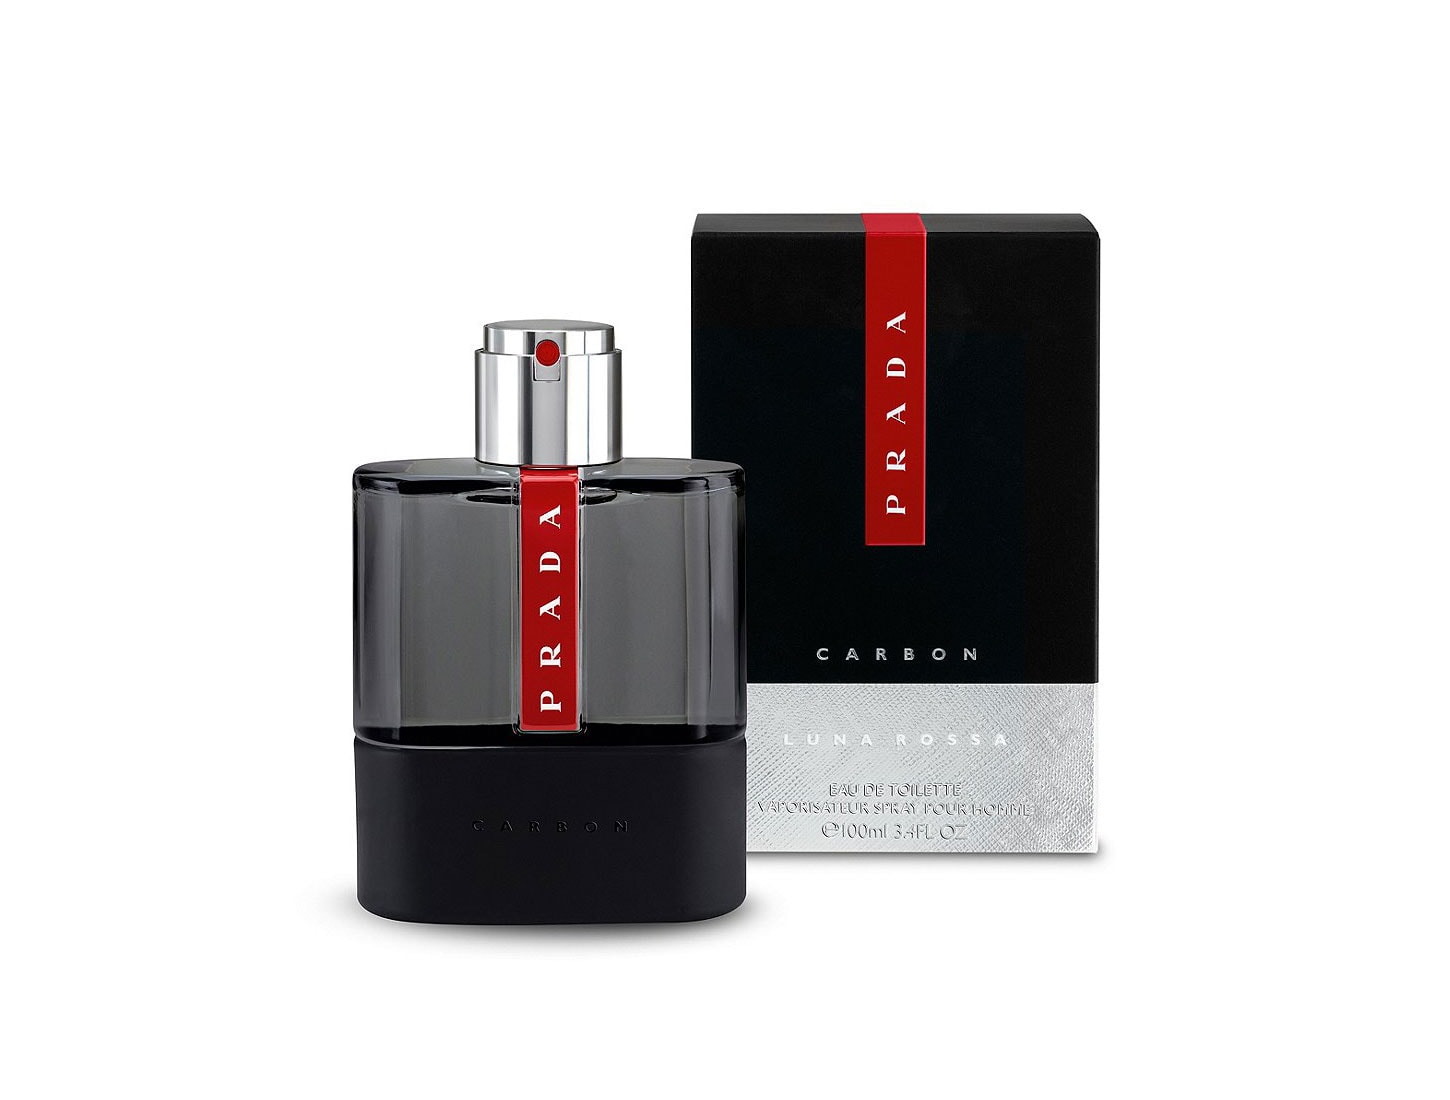 Luna Rossa Carbon » Prada » The Parfumerie » Sri Lanka